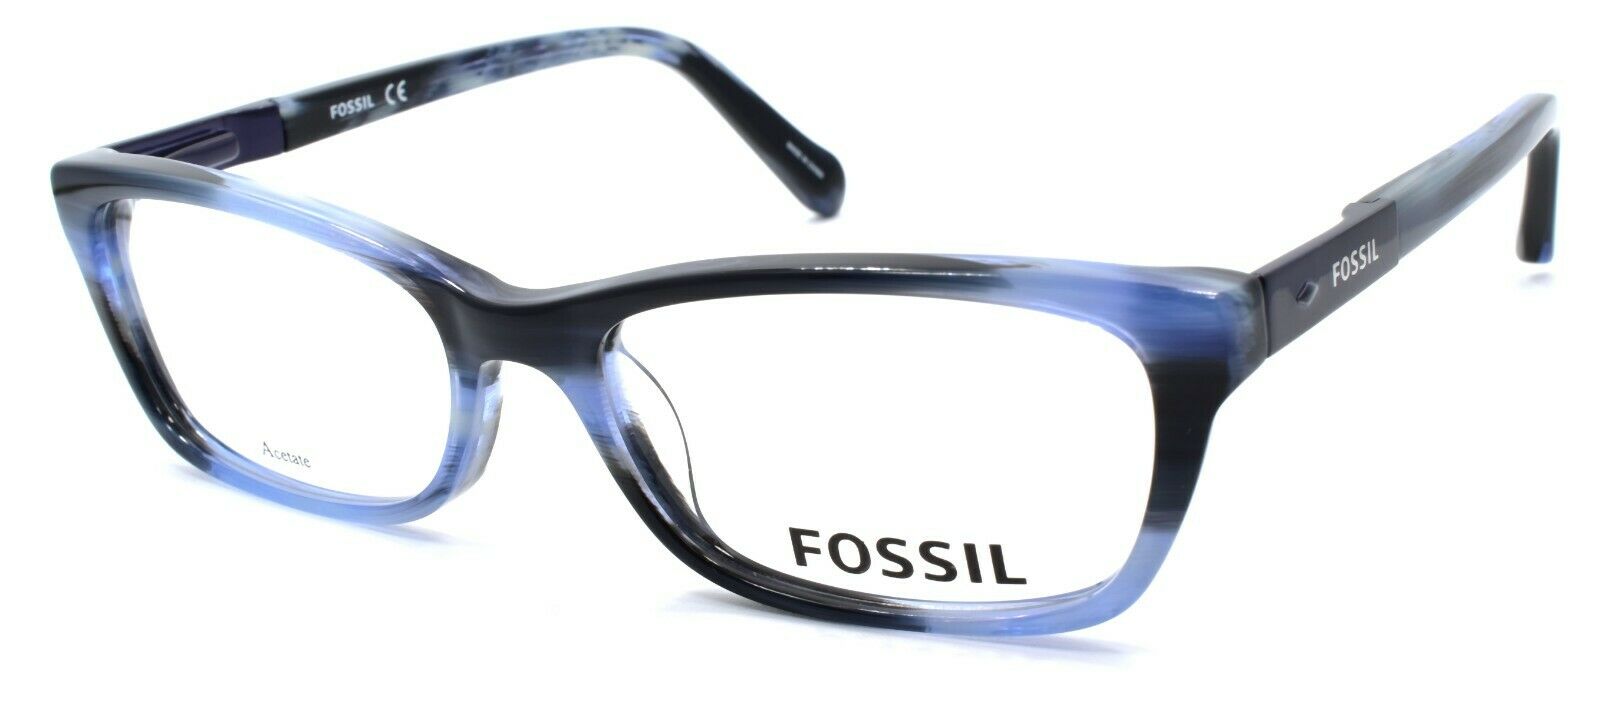 1-Fossil FOS 6049 1F0 Women's Eyeglasses Frames 51-16-135 Striated Blue-716737697825-IKSpecs